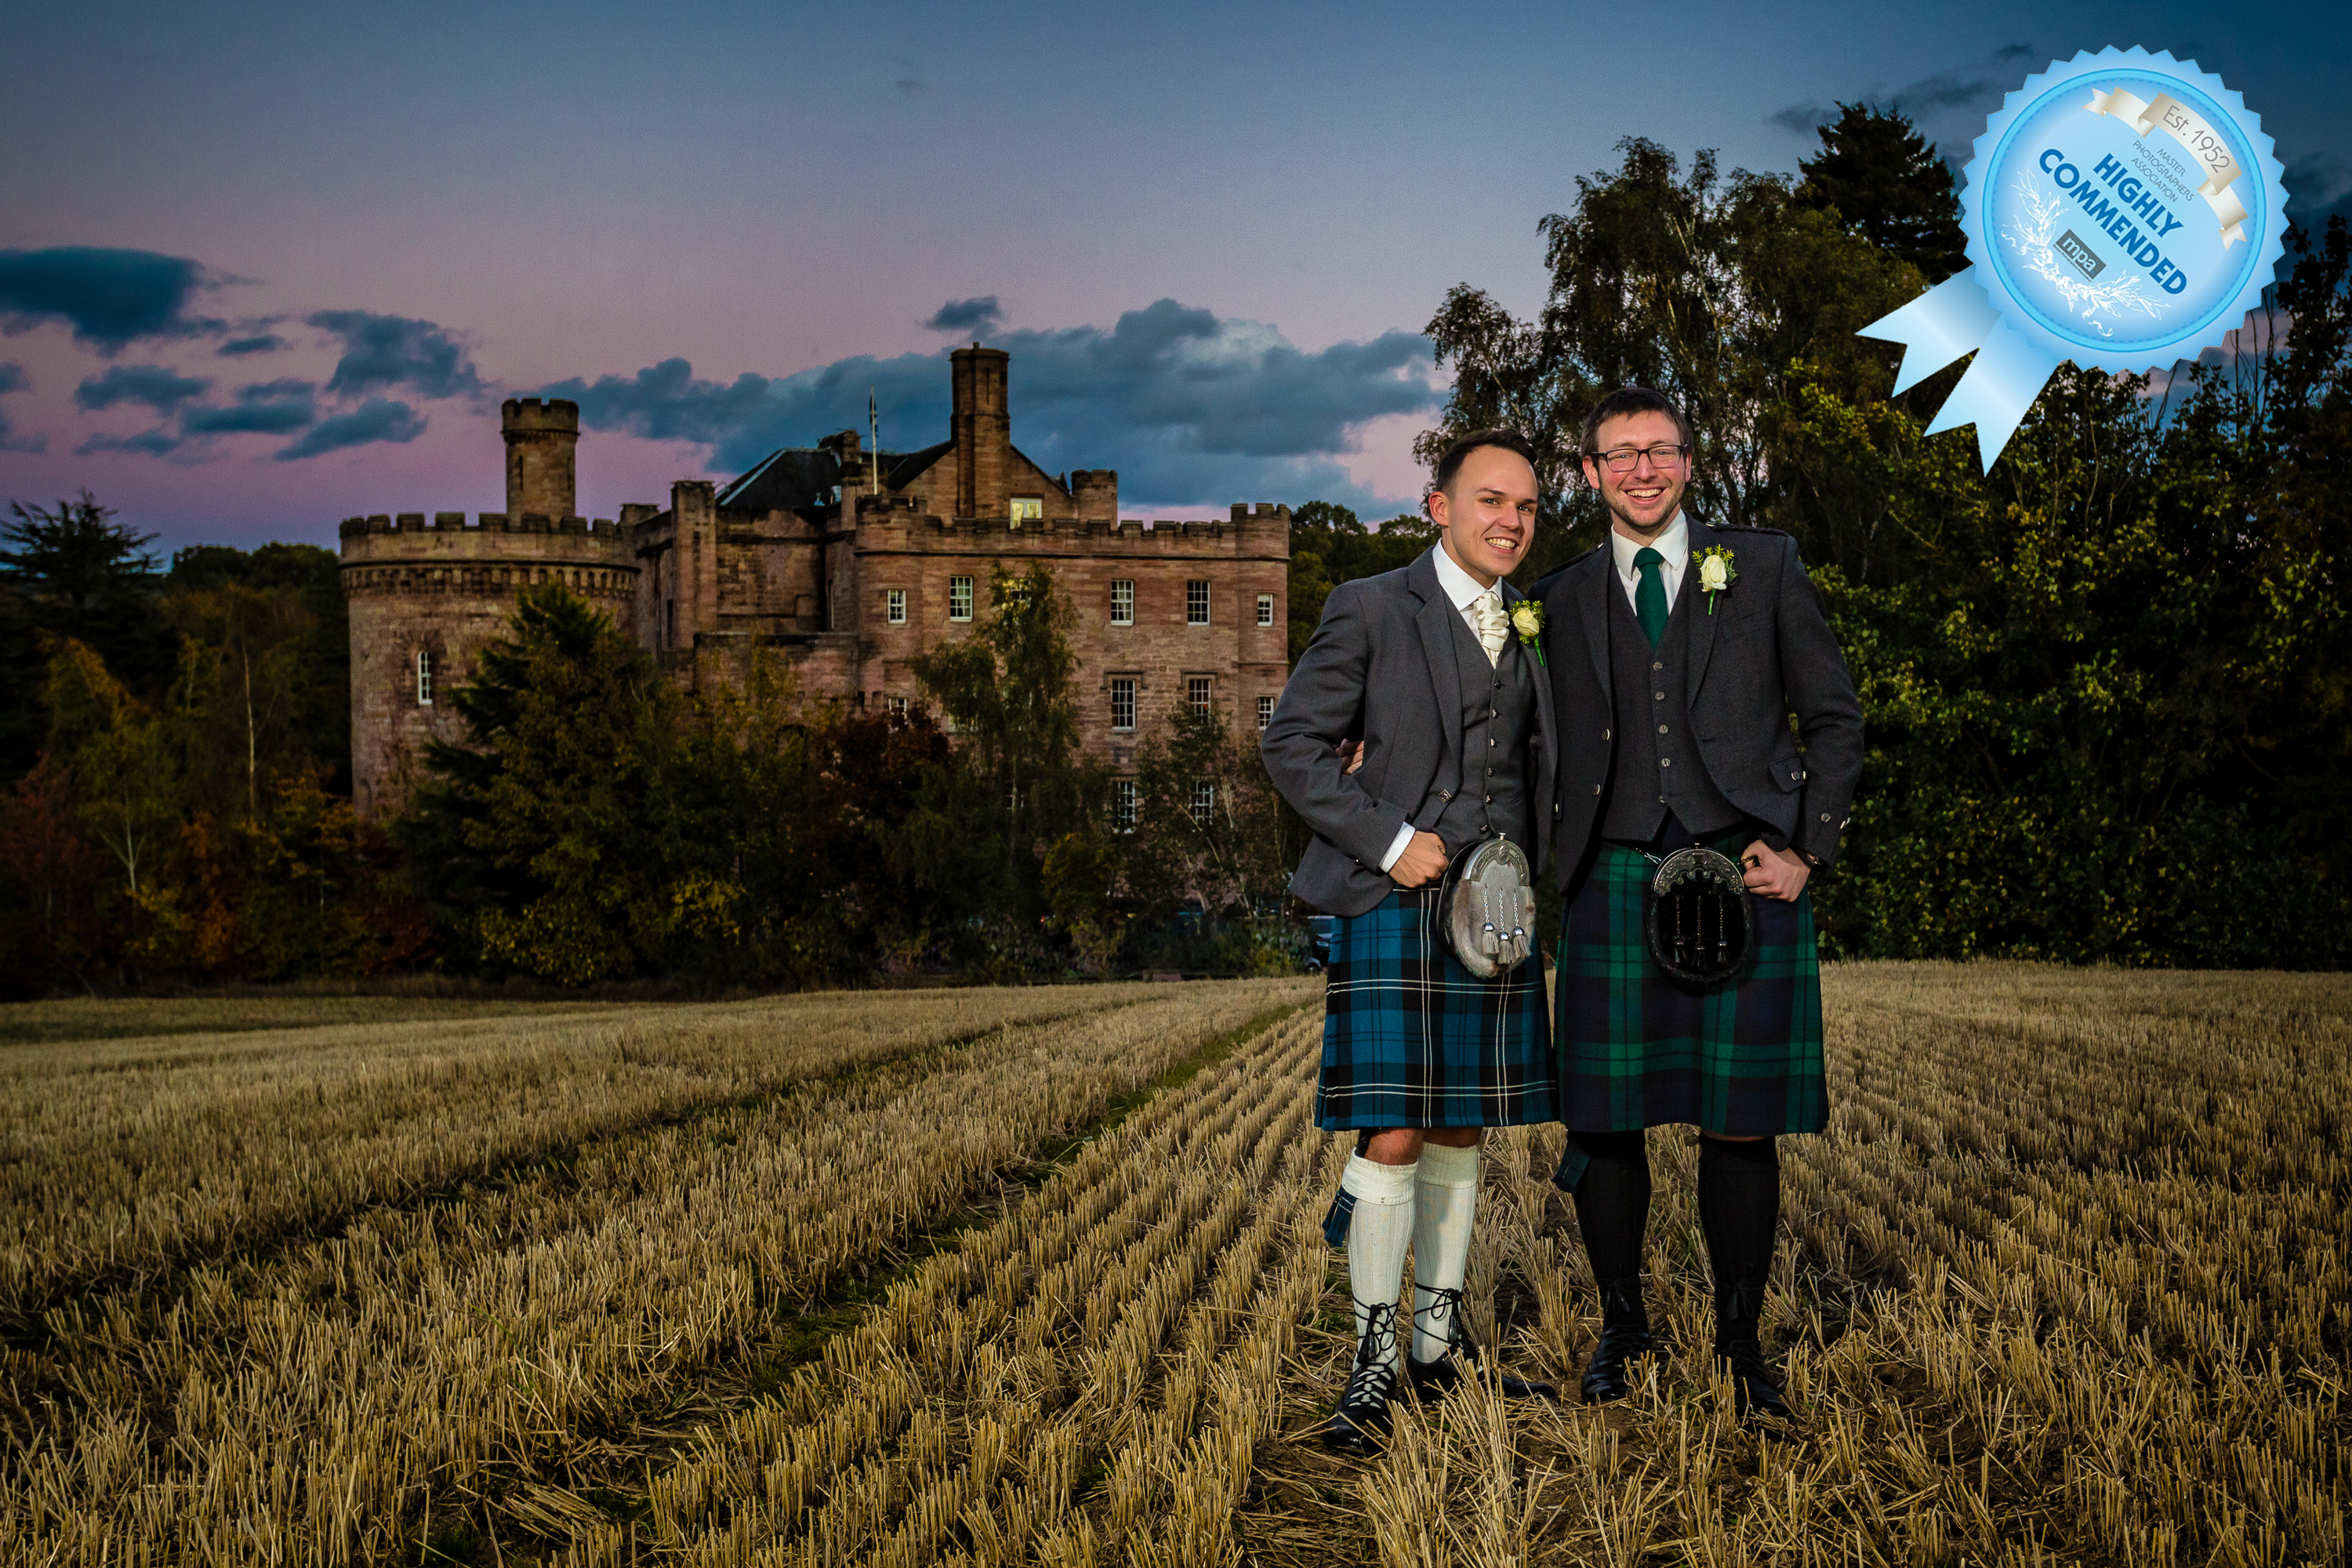 Wedding photography Dalhousie castle Scotland